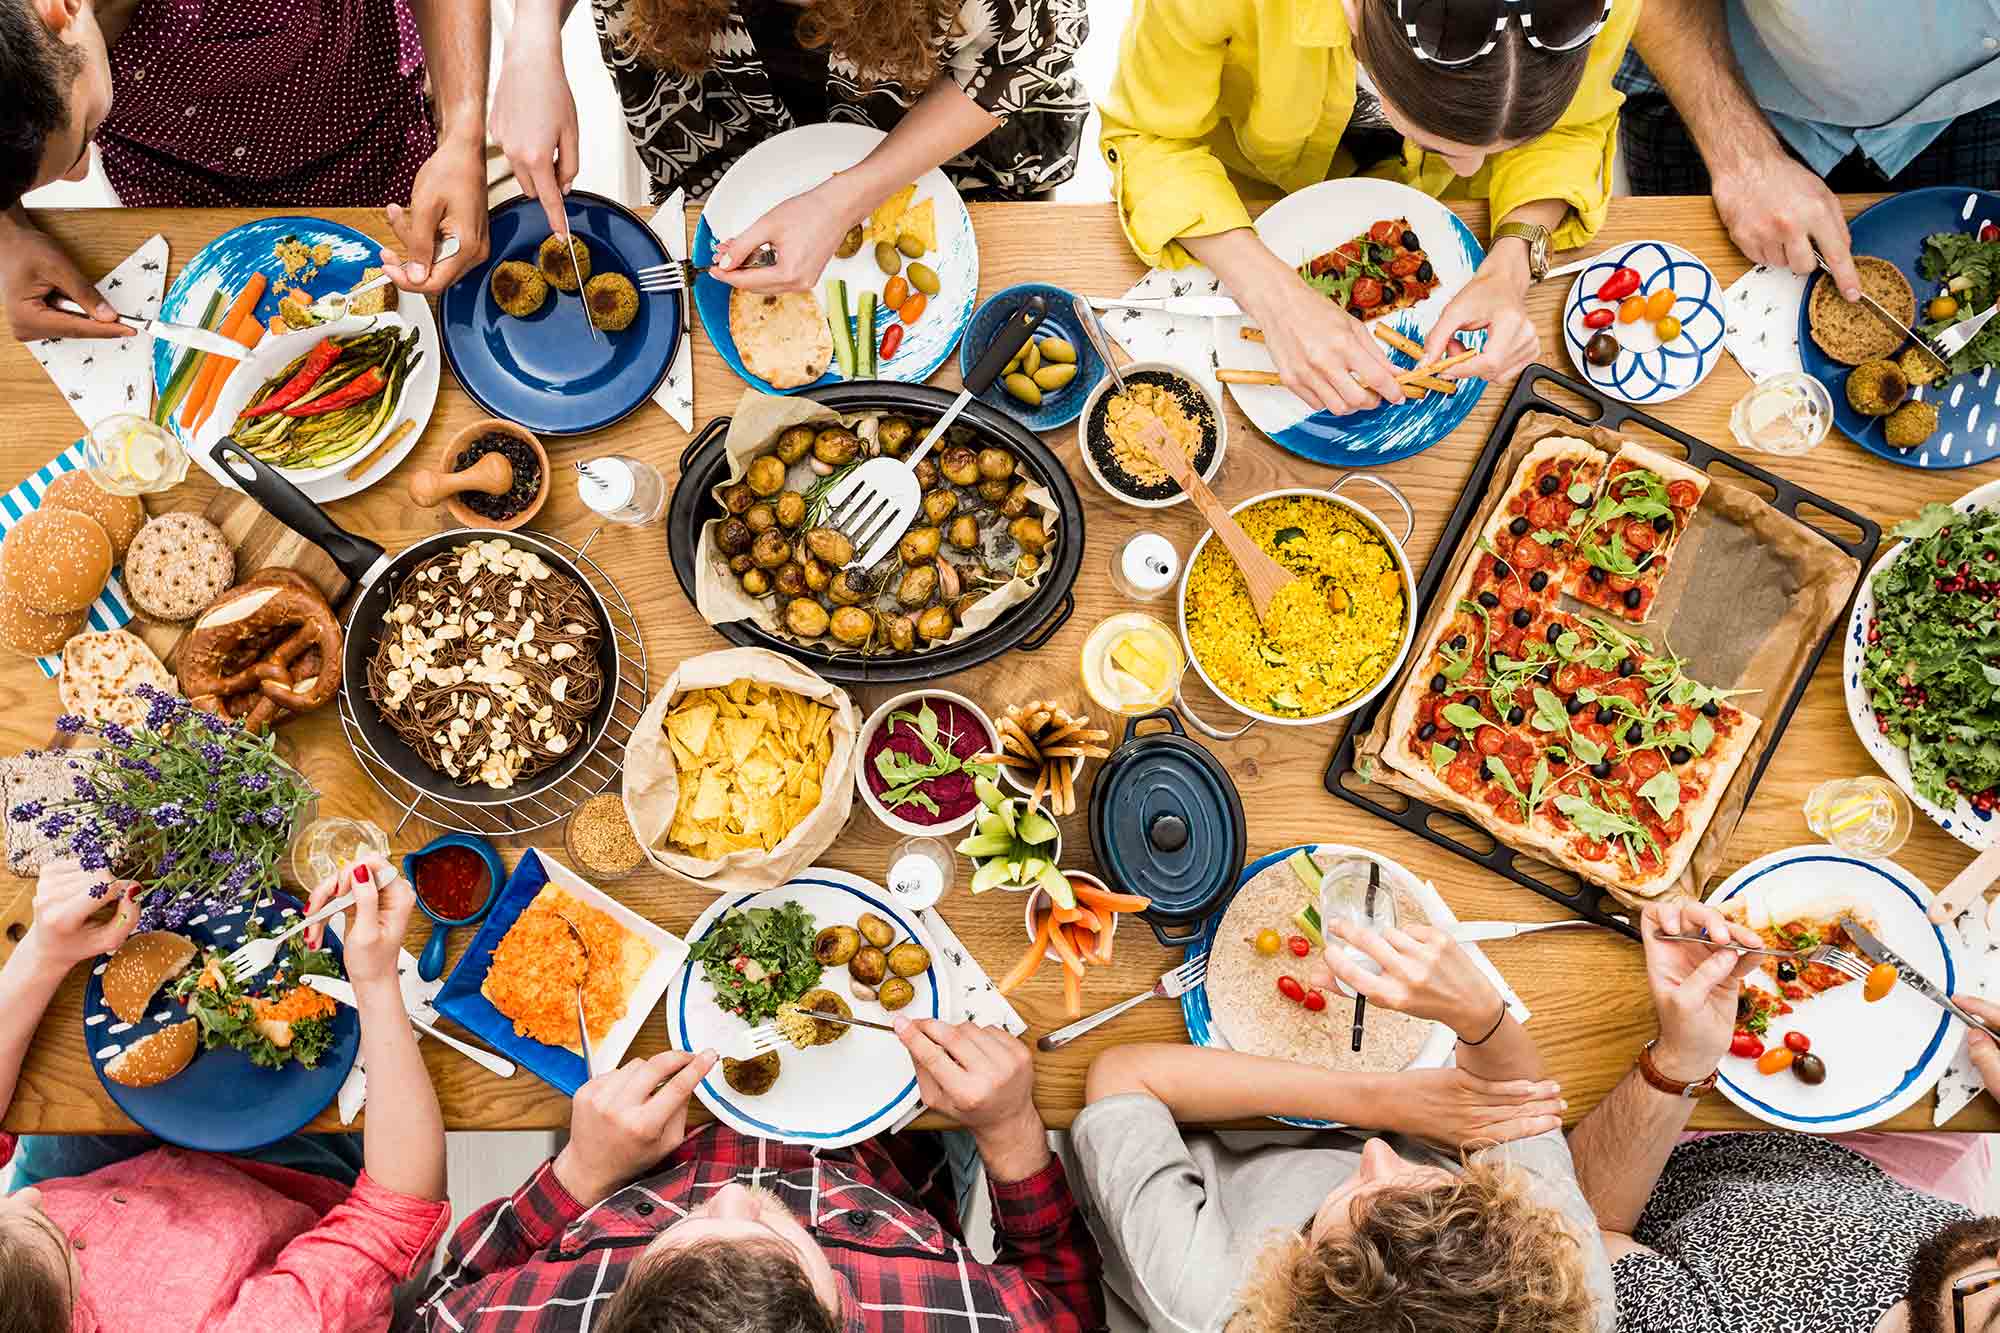 group of people at table eating vegetarian/vegan options